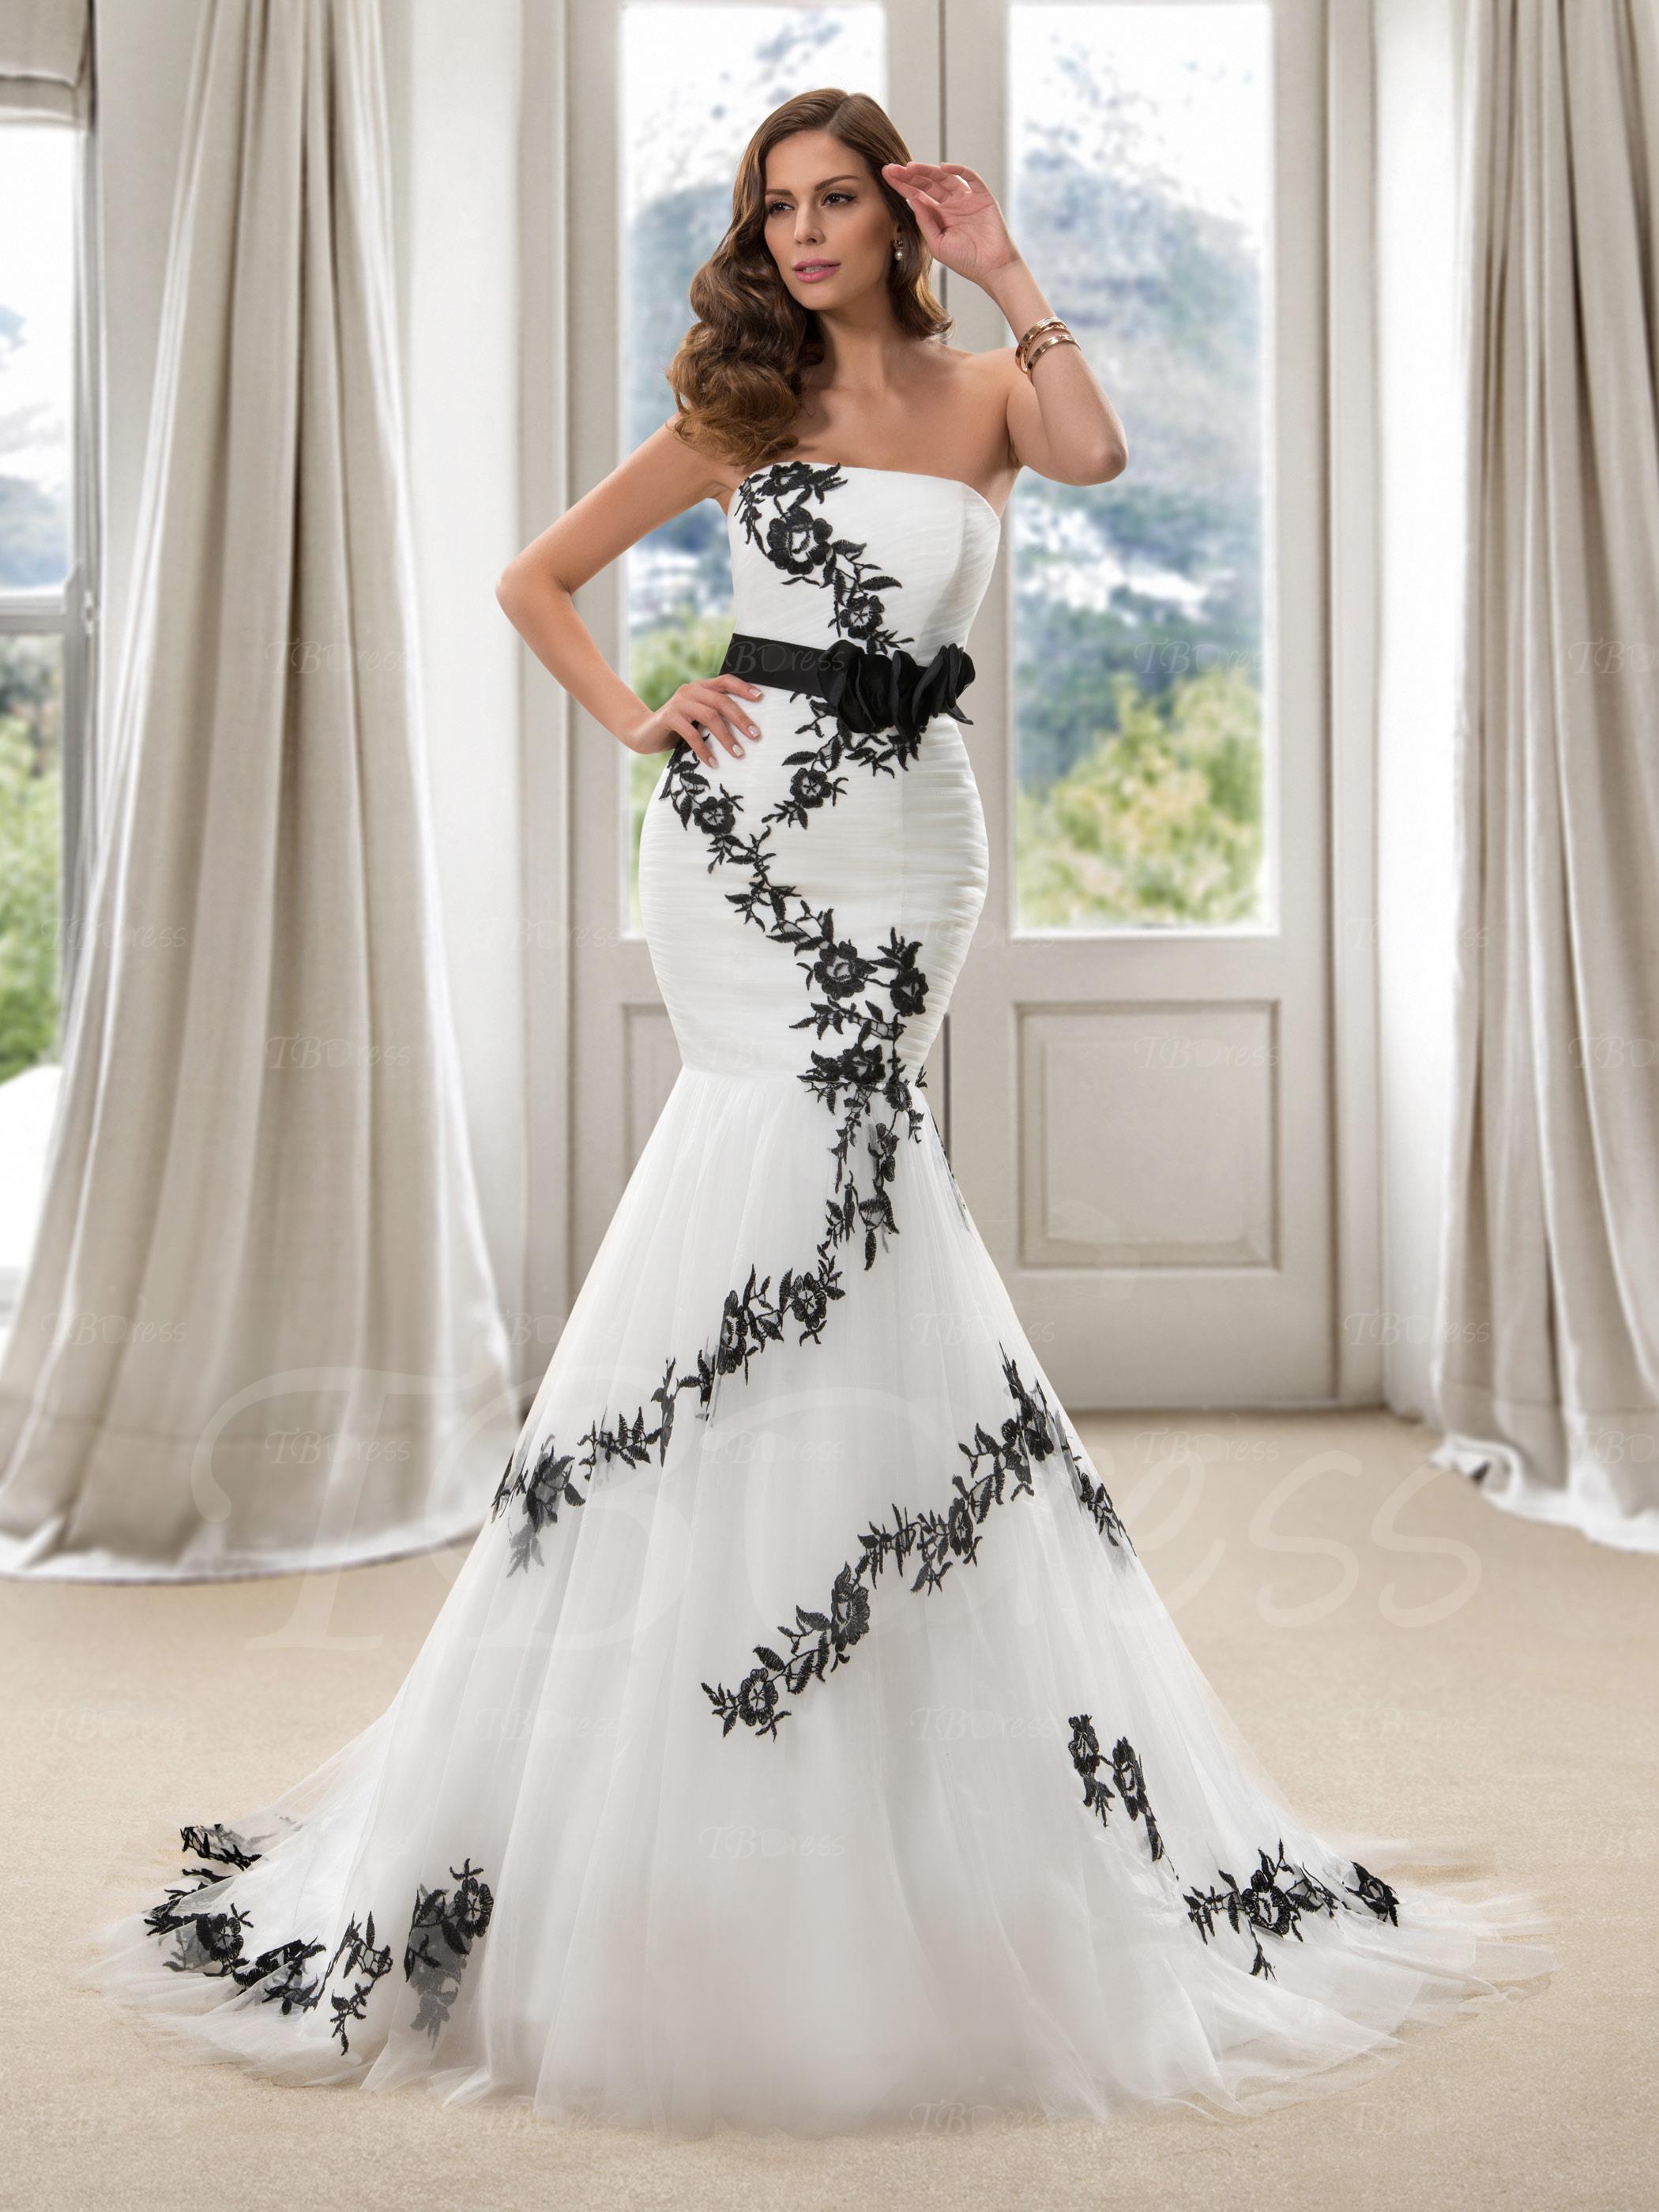 White mermaid wedding dress with black lace